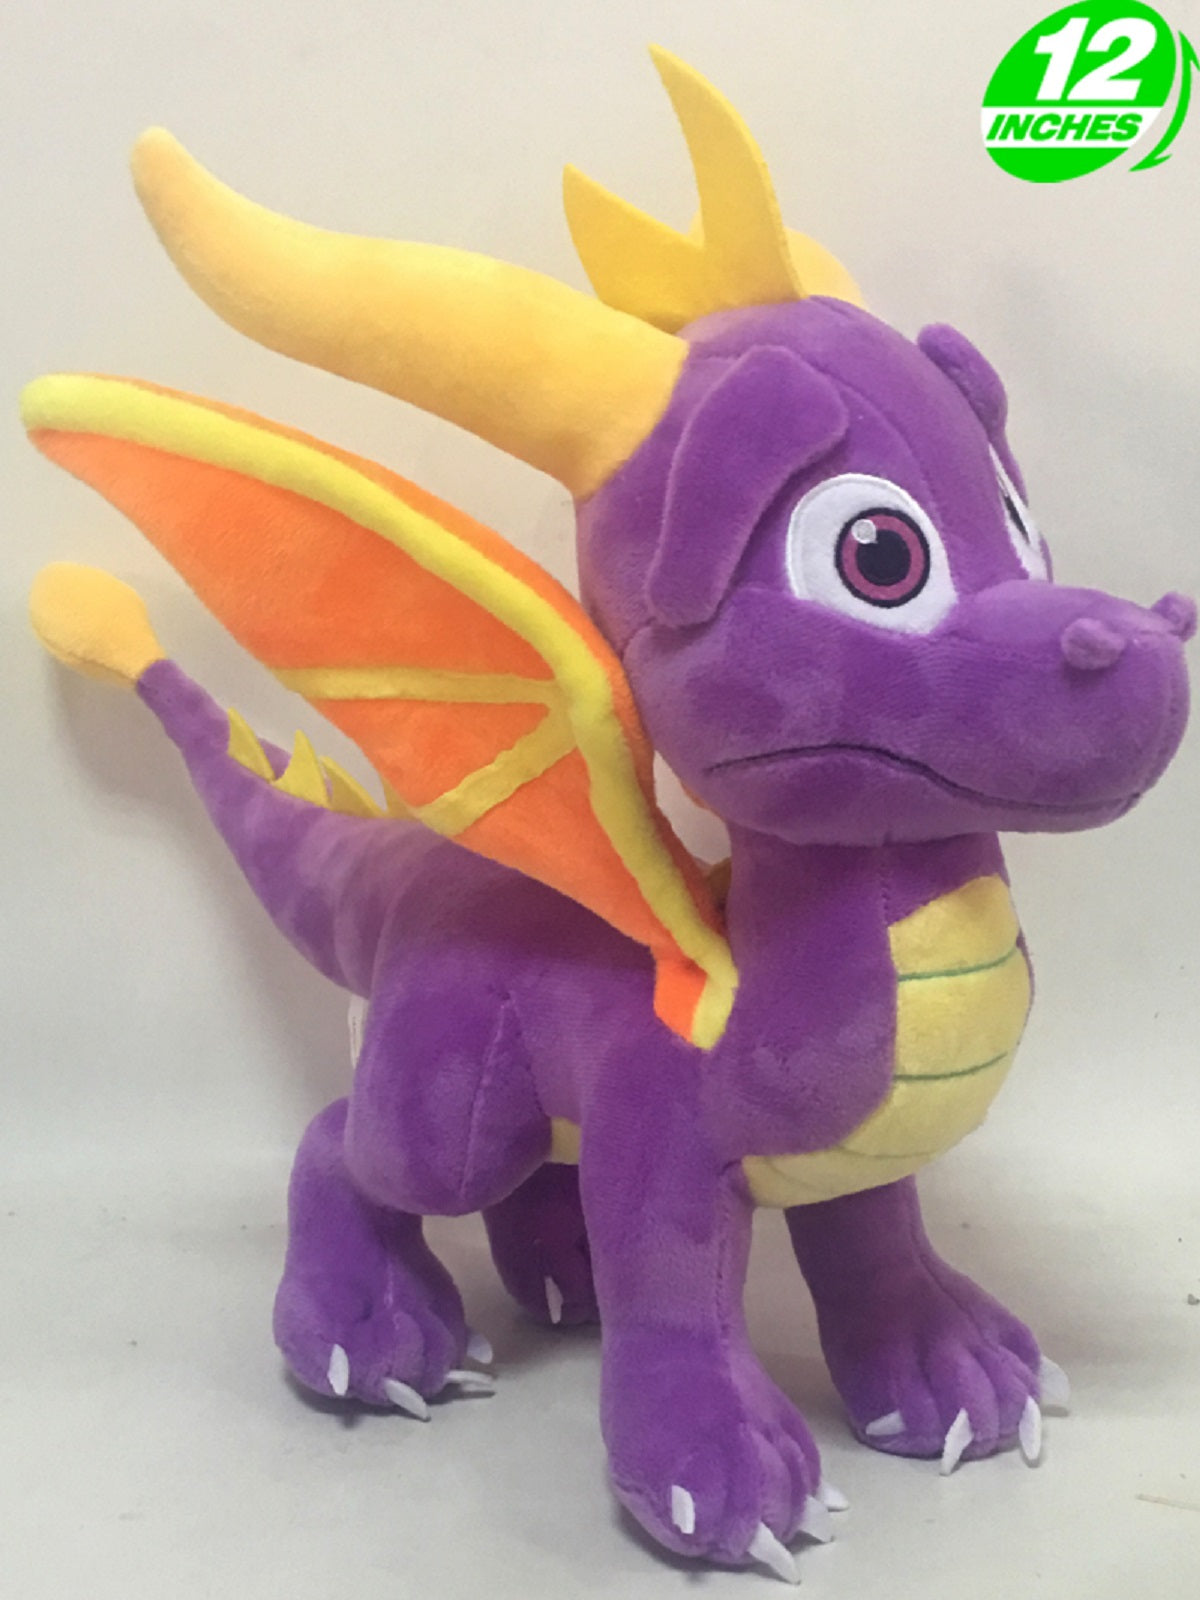 Spyro The Dragon Plush Doll - Super Anime Store FREE SHIPPING FAST SHIPPING USA